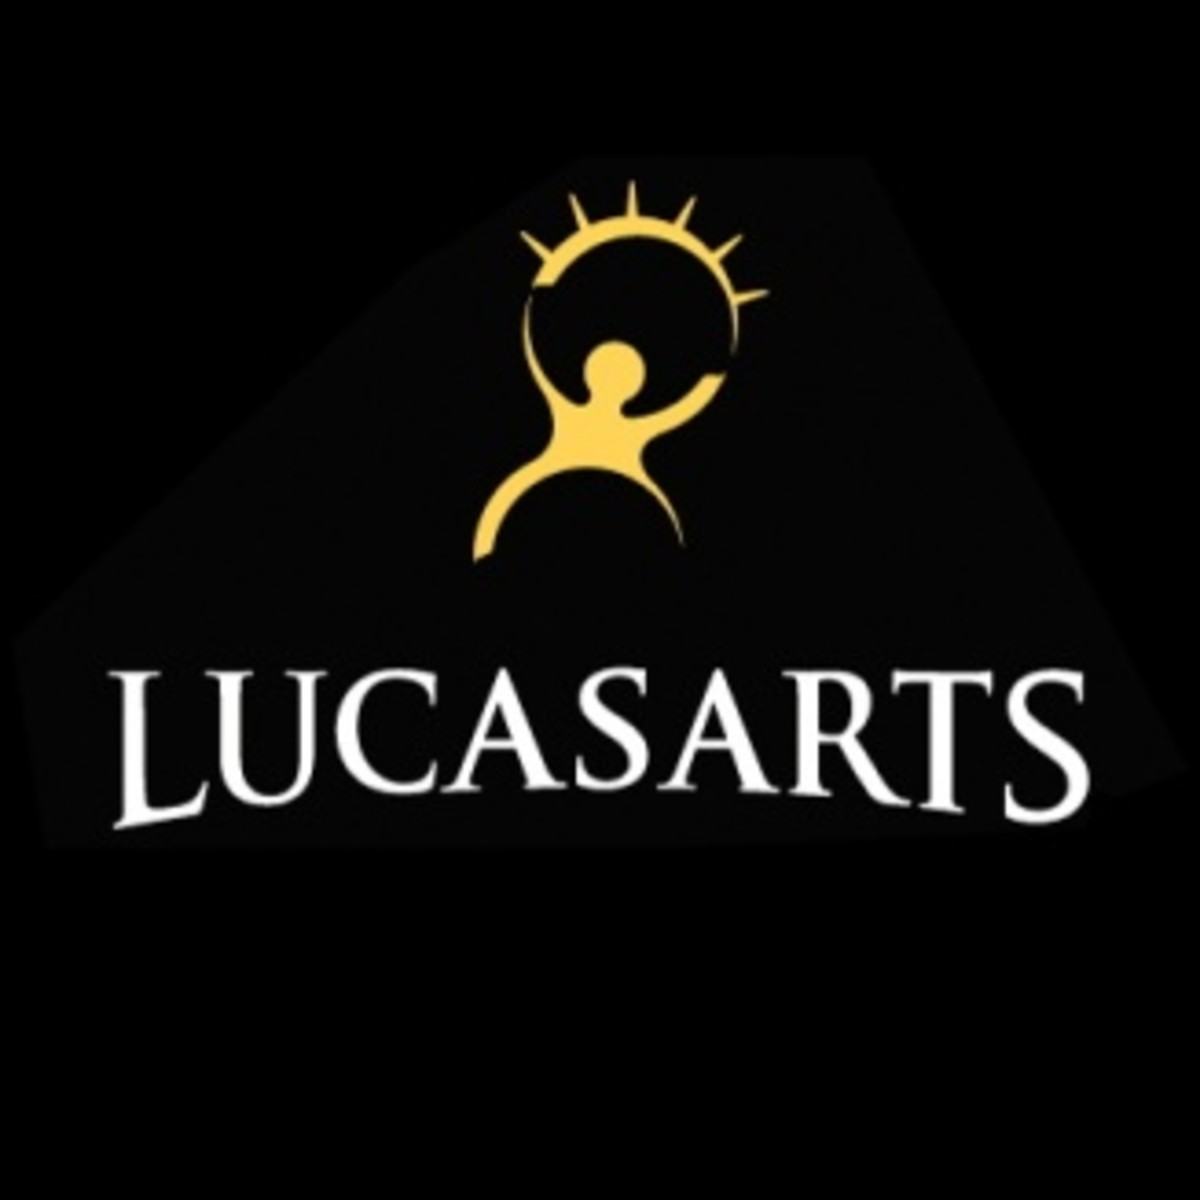 LucasArts Lucas Arts giochi Steam sconti Monkey Island Outlaws Star Wars Prezzo